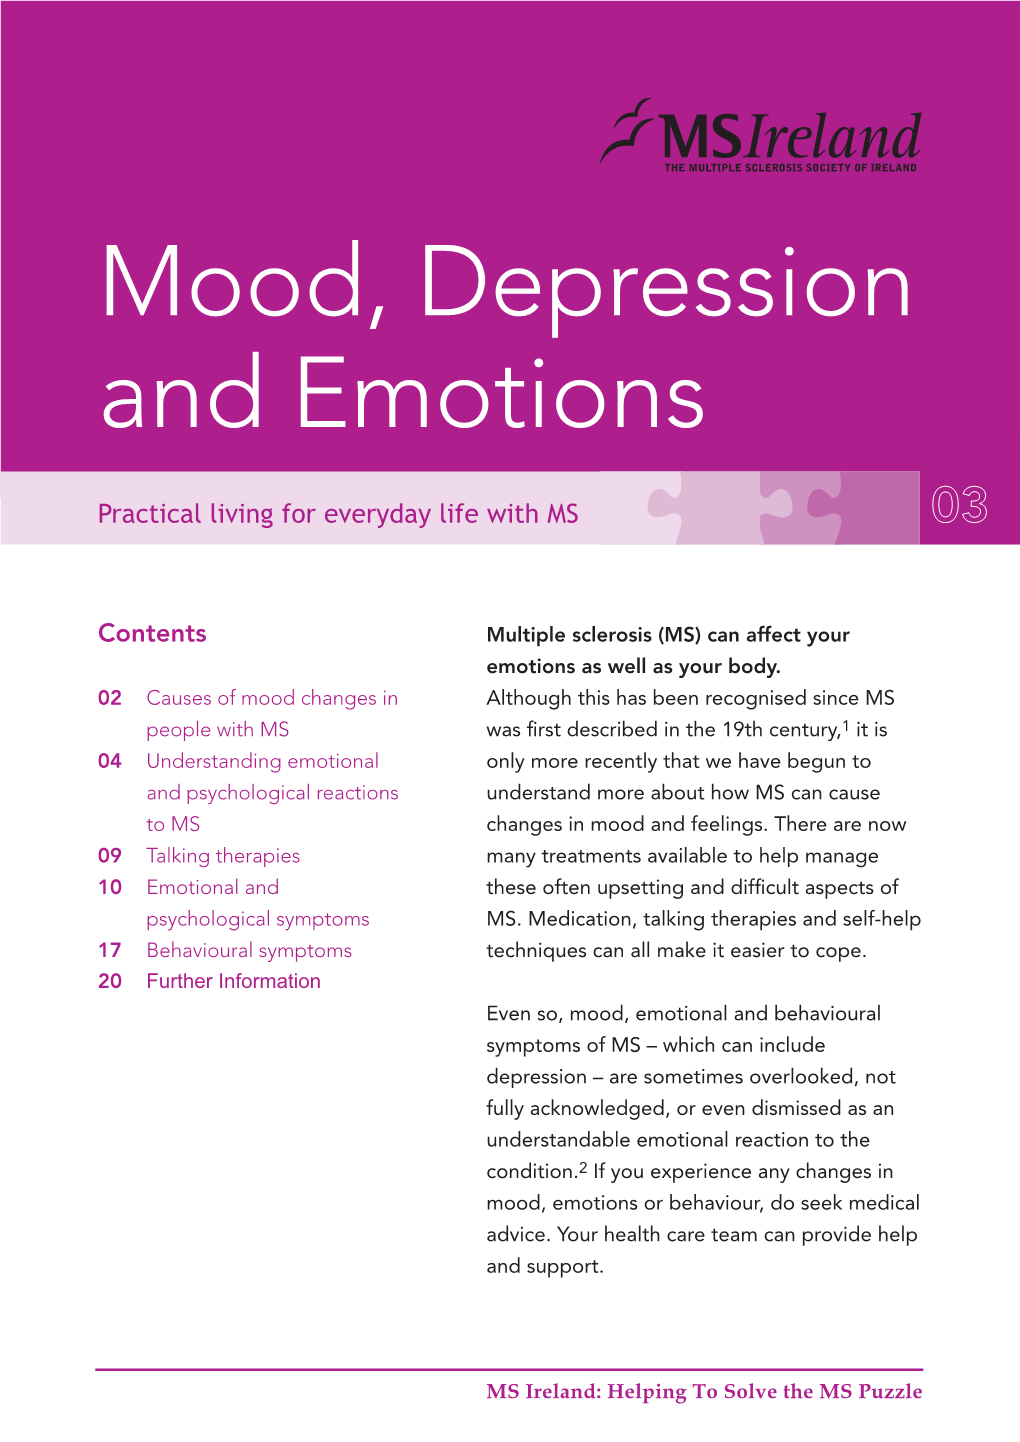 Mood, Depression and Emotions